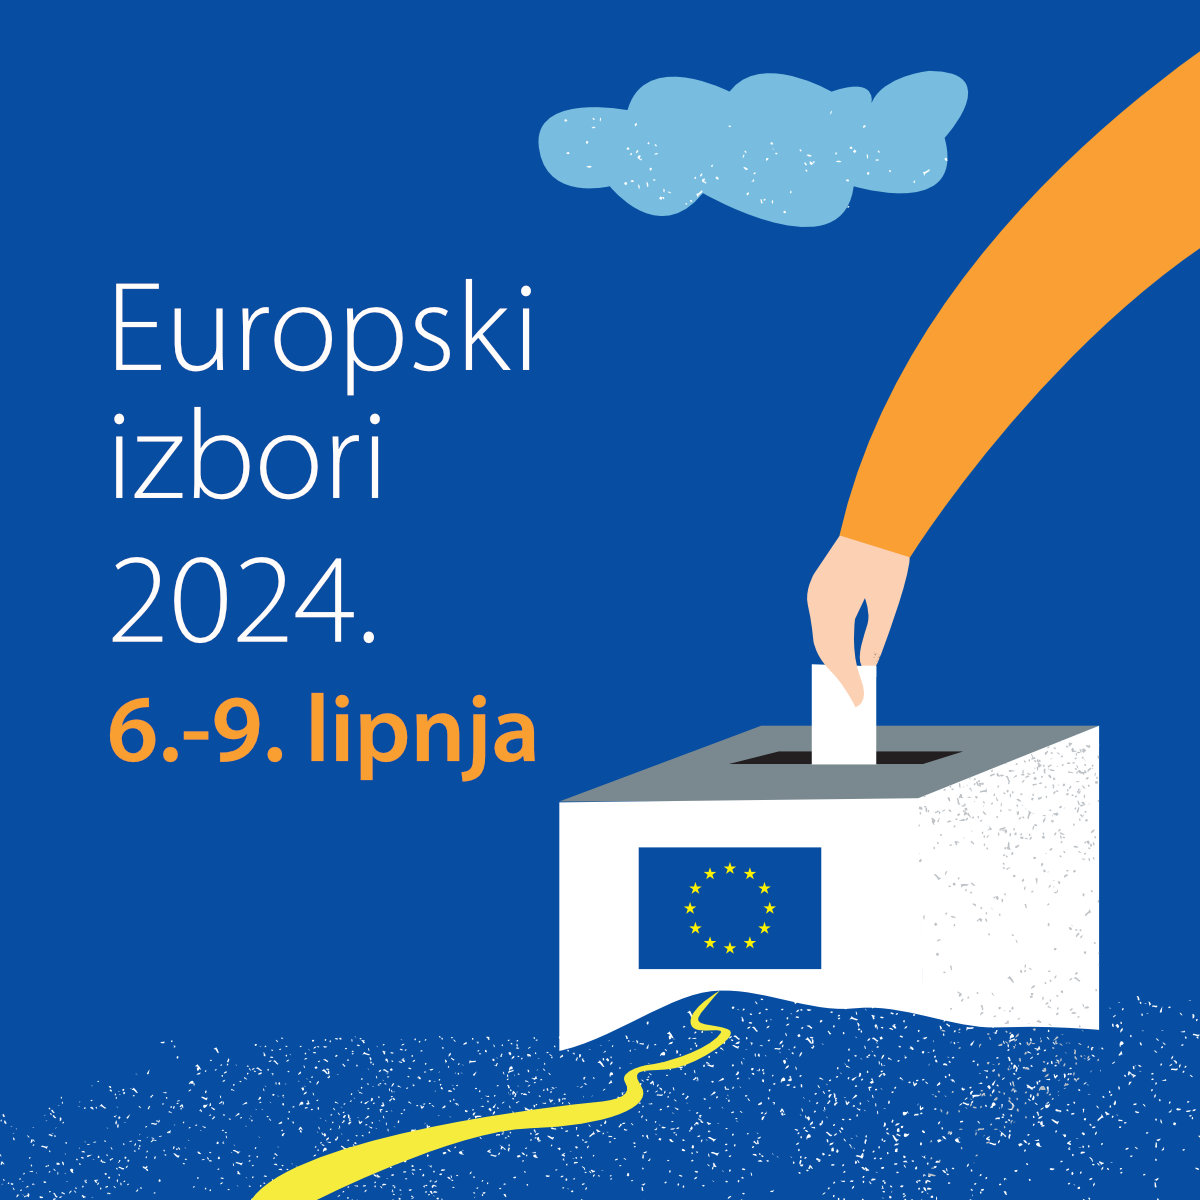 Europski izbori 2024. - Square.jpg